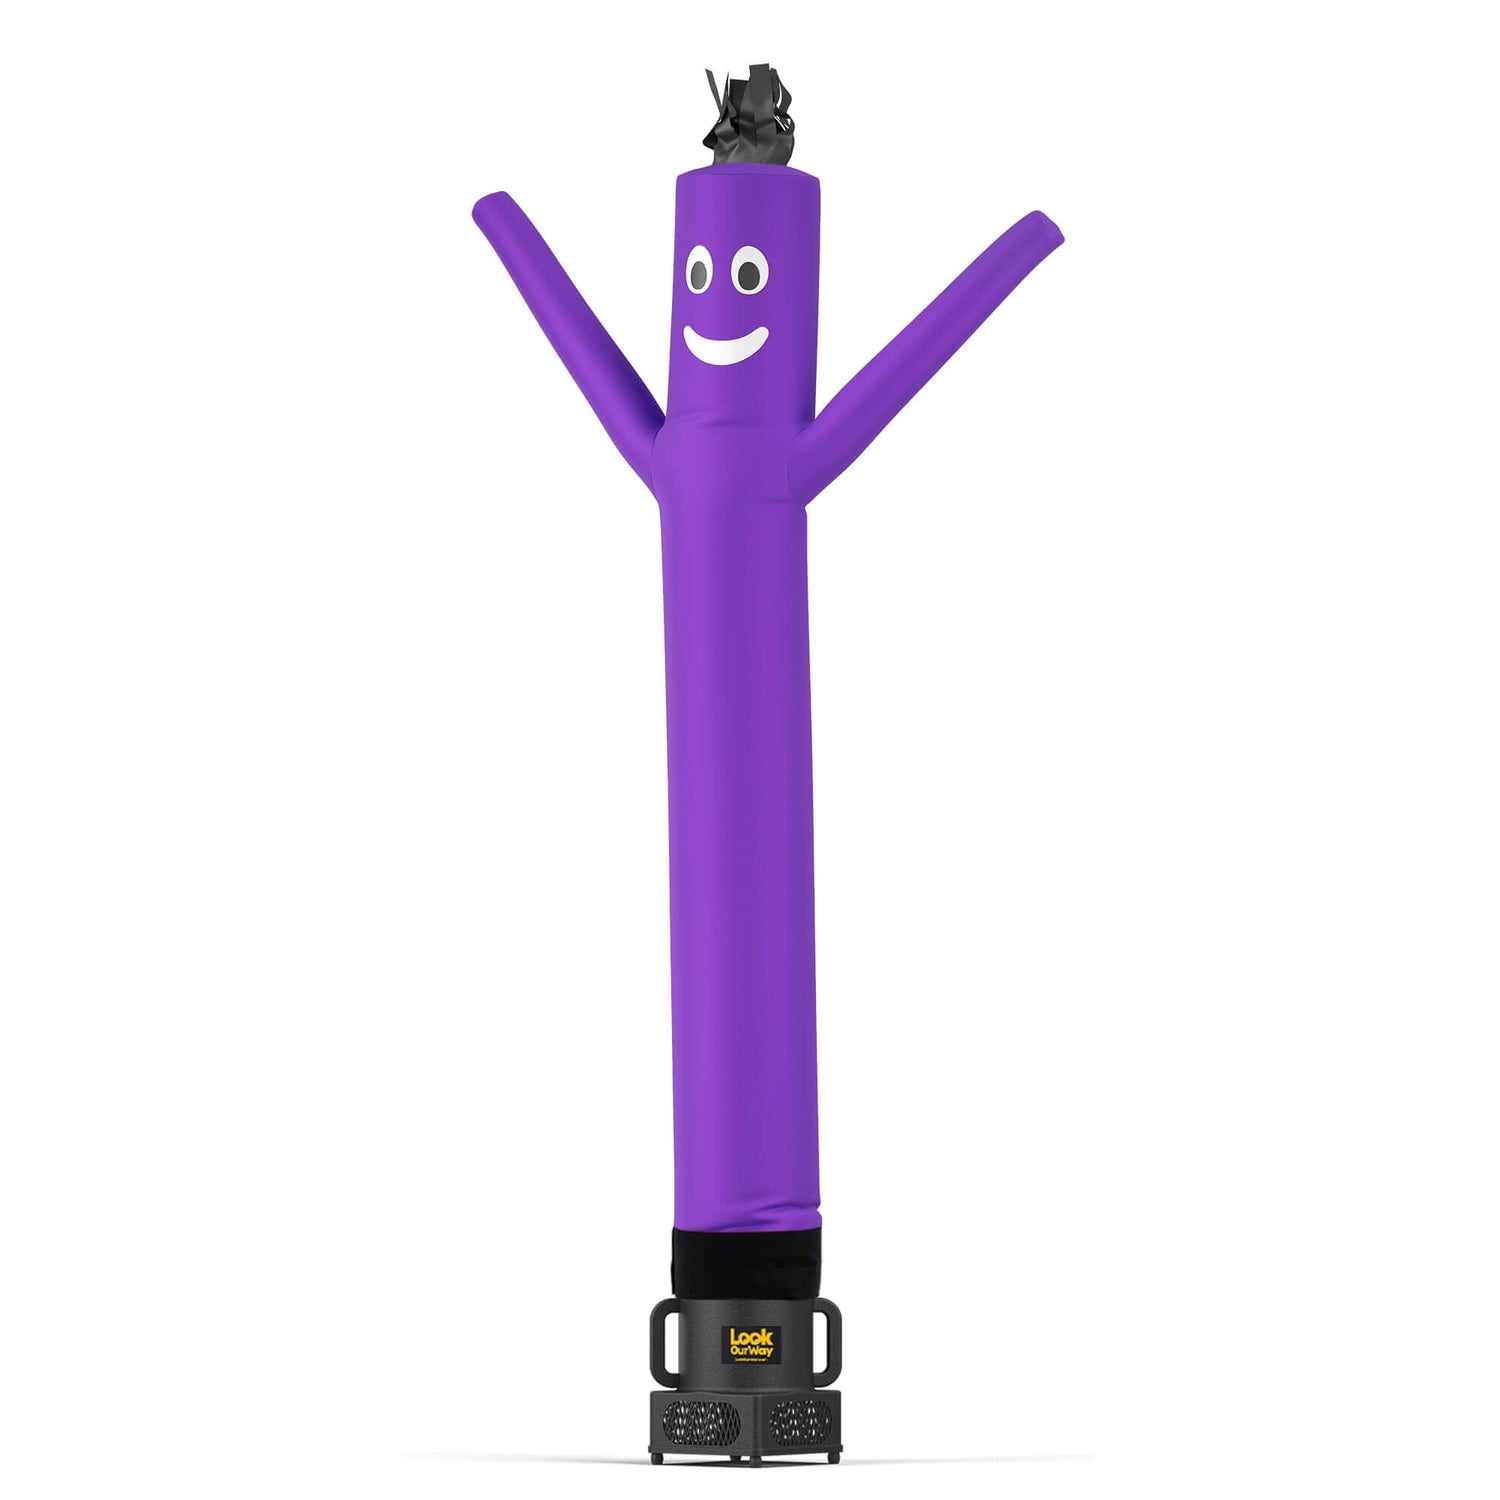 Air Dancers® Inflatable Tube Man Purple 11M0200249-B